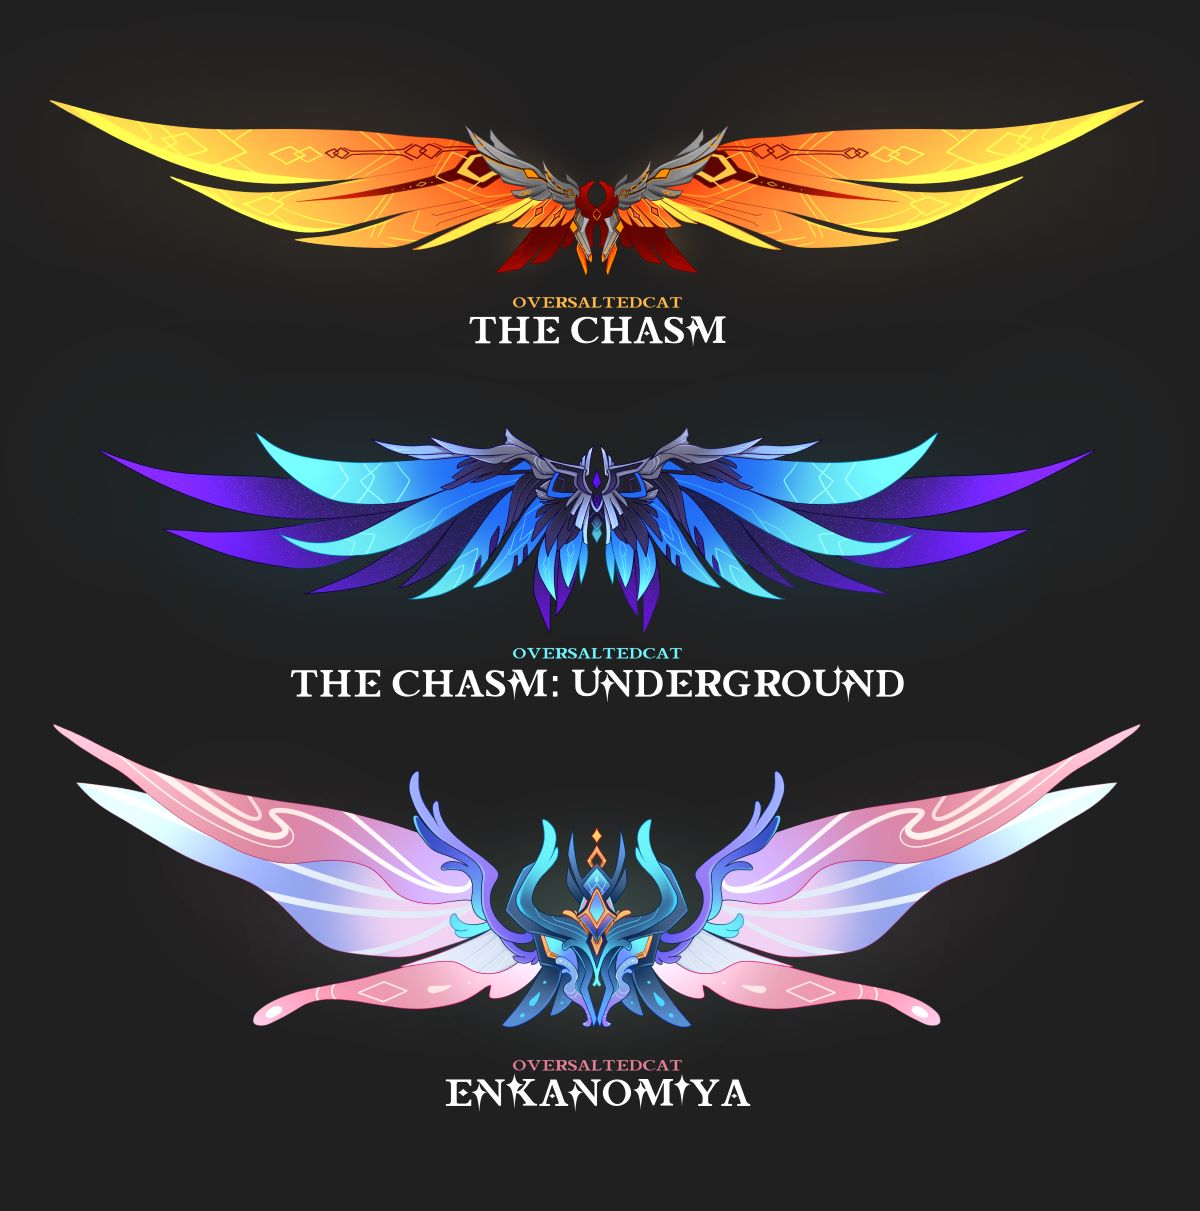 Concept wings of Deep Rock and Enkanomiya